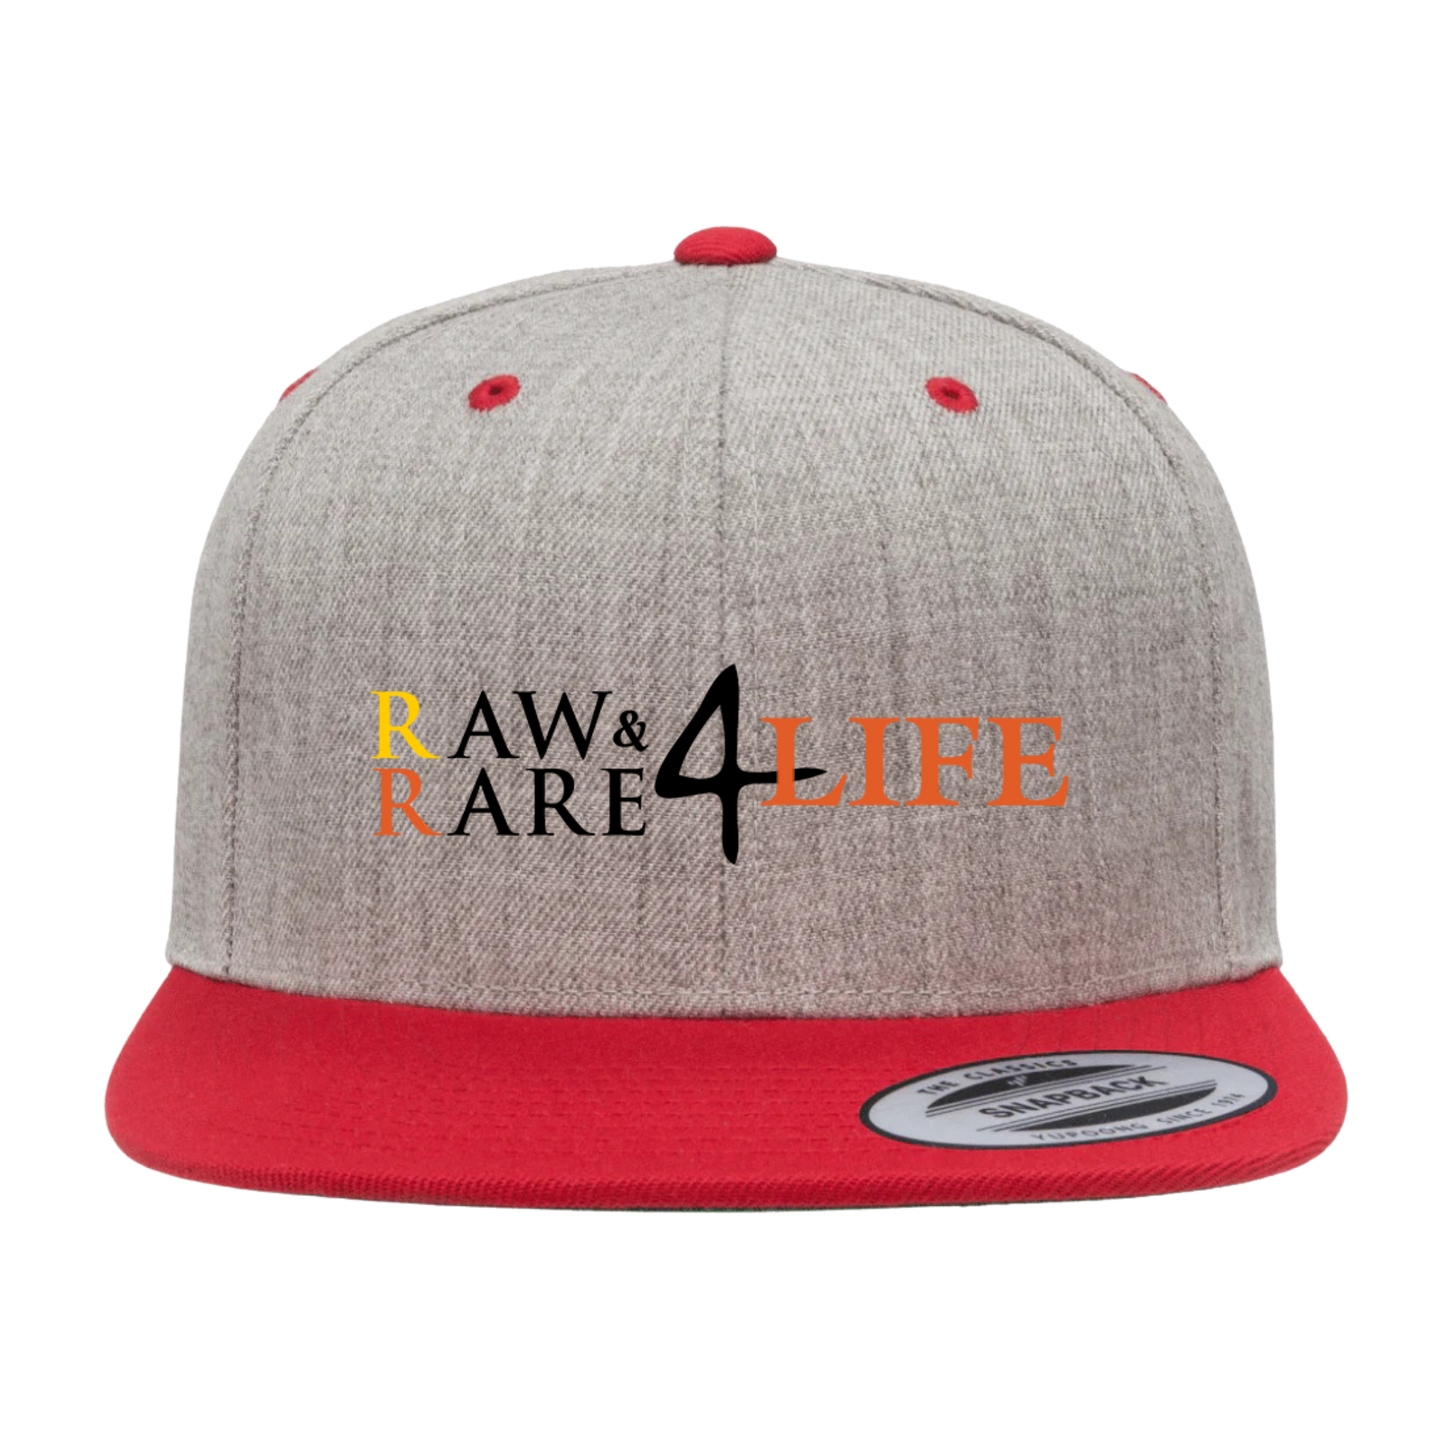 Raw & Rare 4 Life 2 Tone Snapback Hat